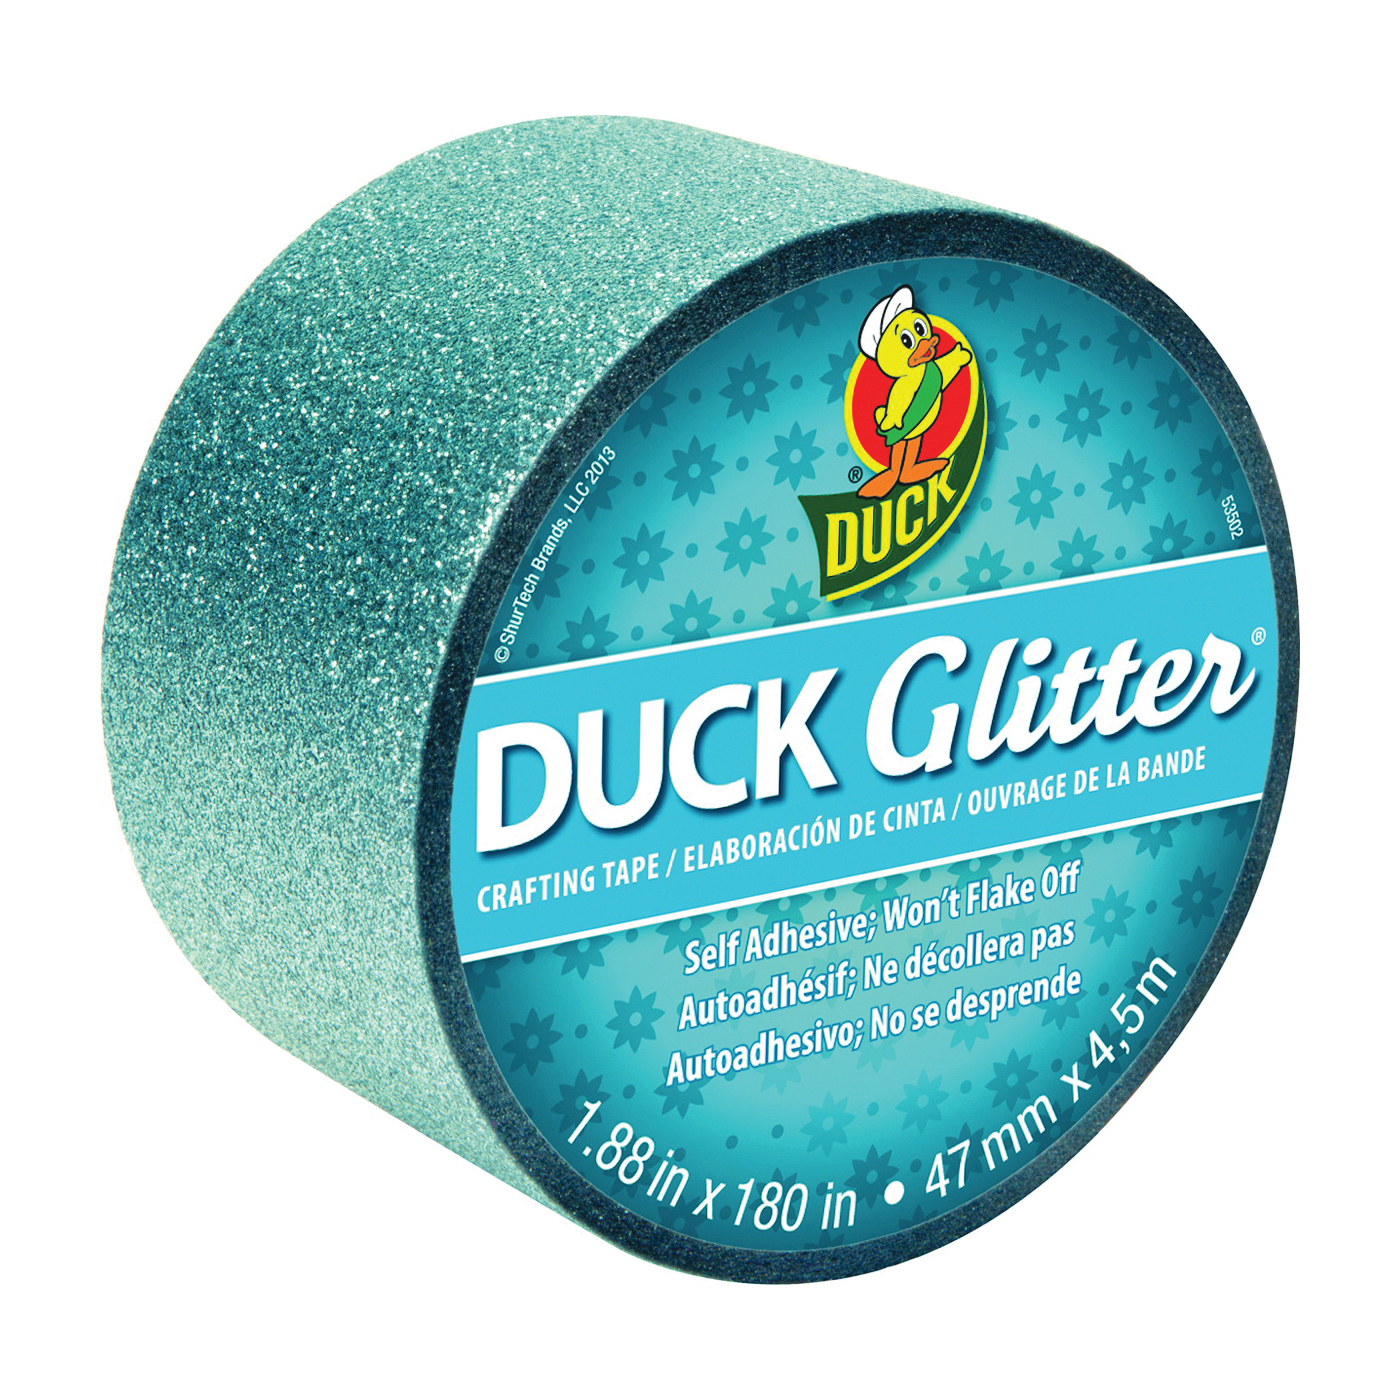 Duck Glitter Crafting Tape